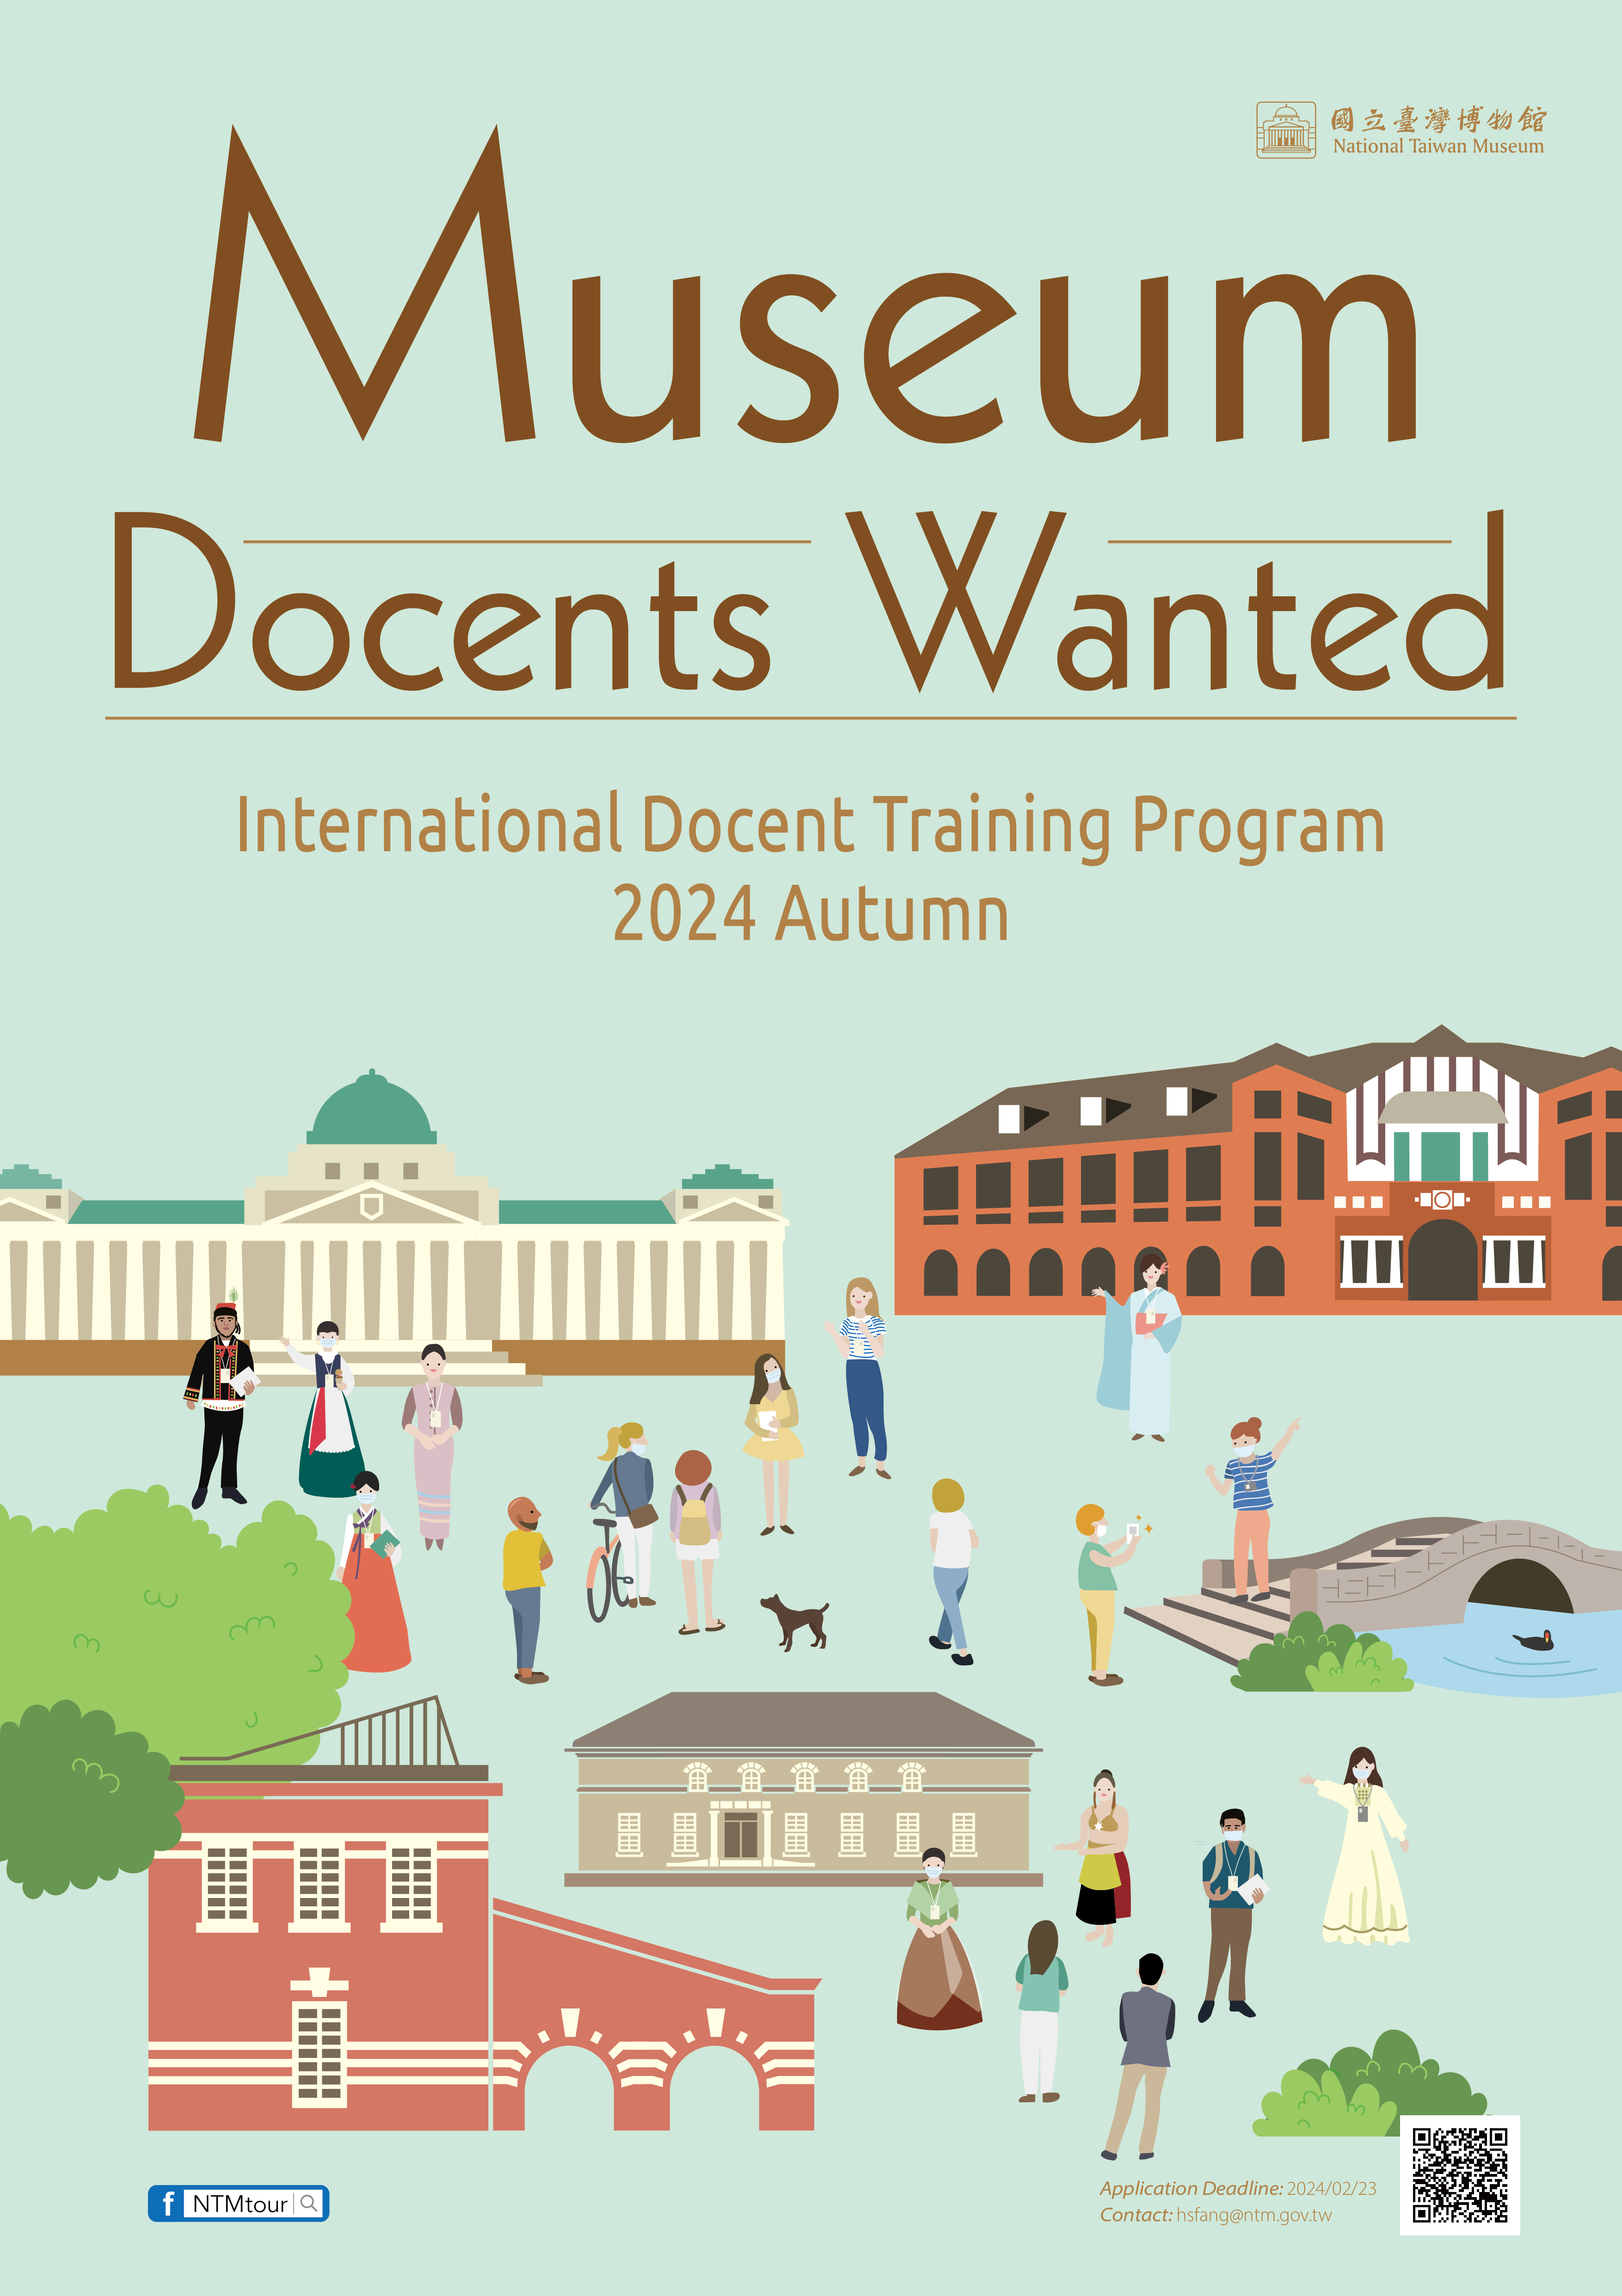 Recruitment for International Docents 2024 Autumn